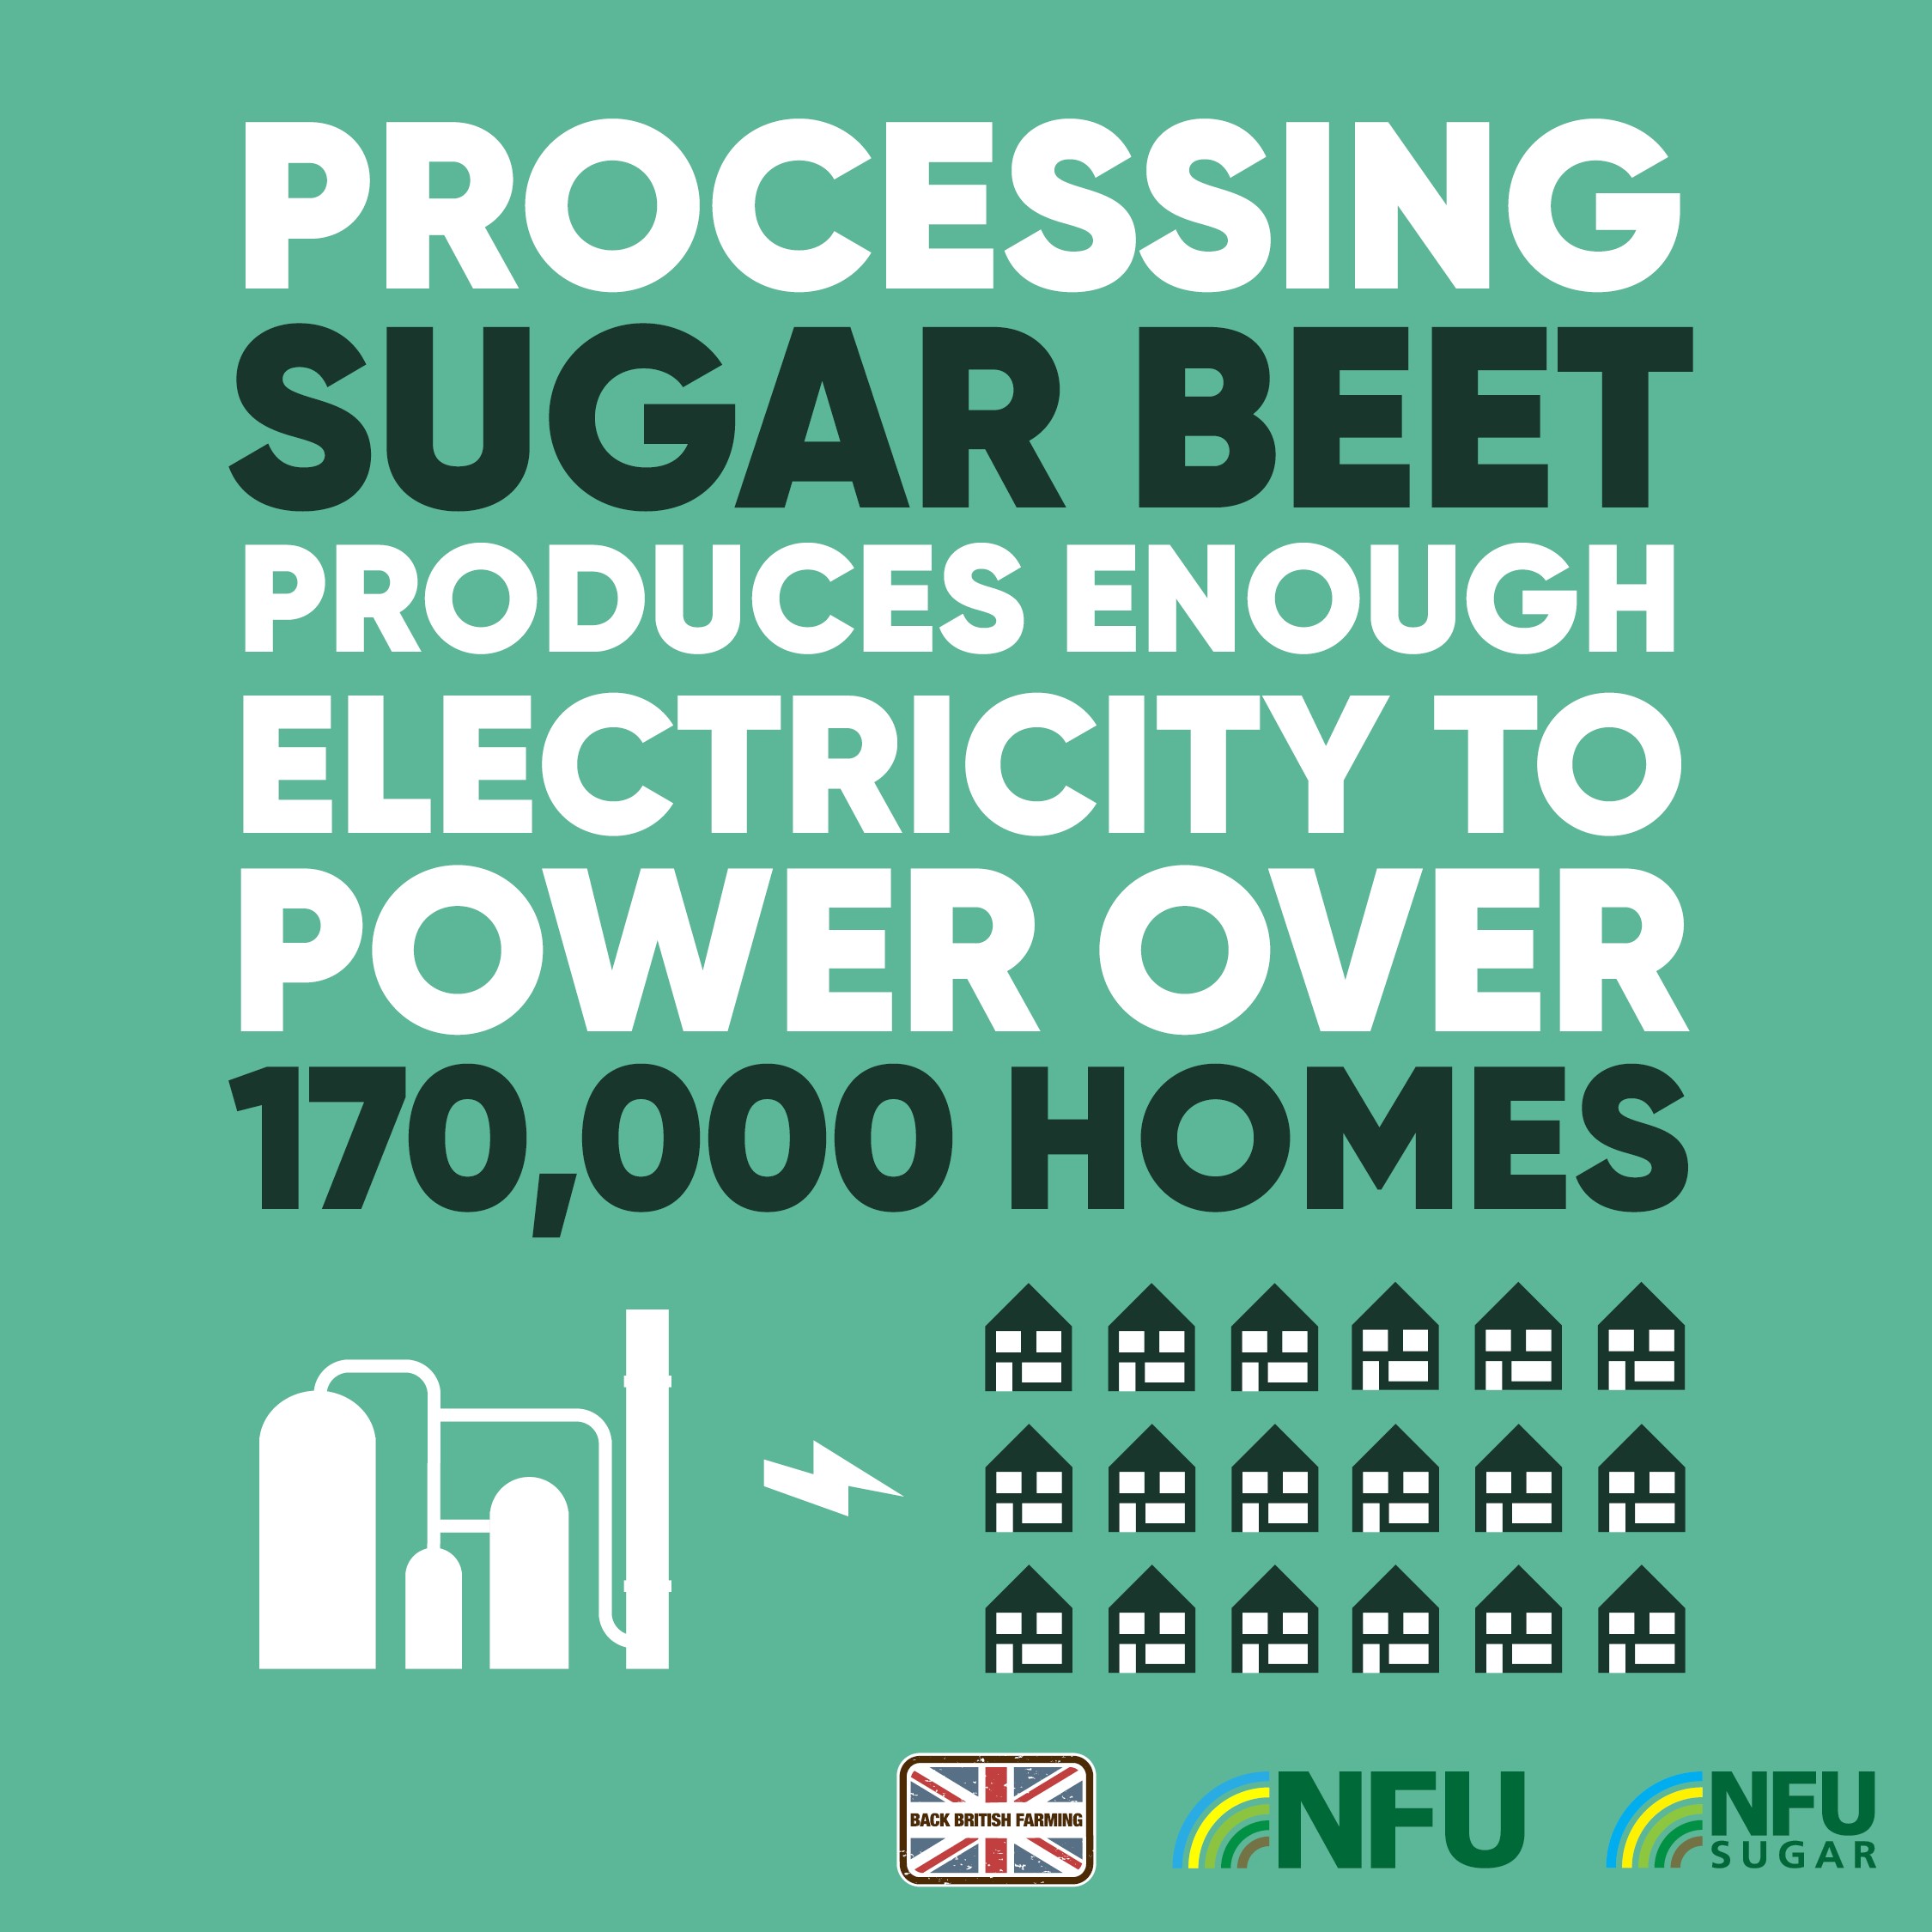 NFU Sugar infographic instagram 170,000 homes